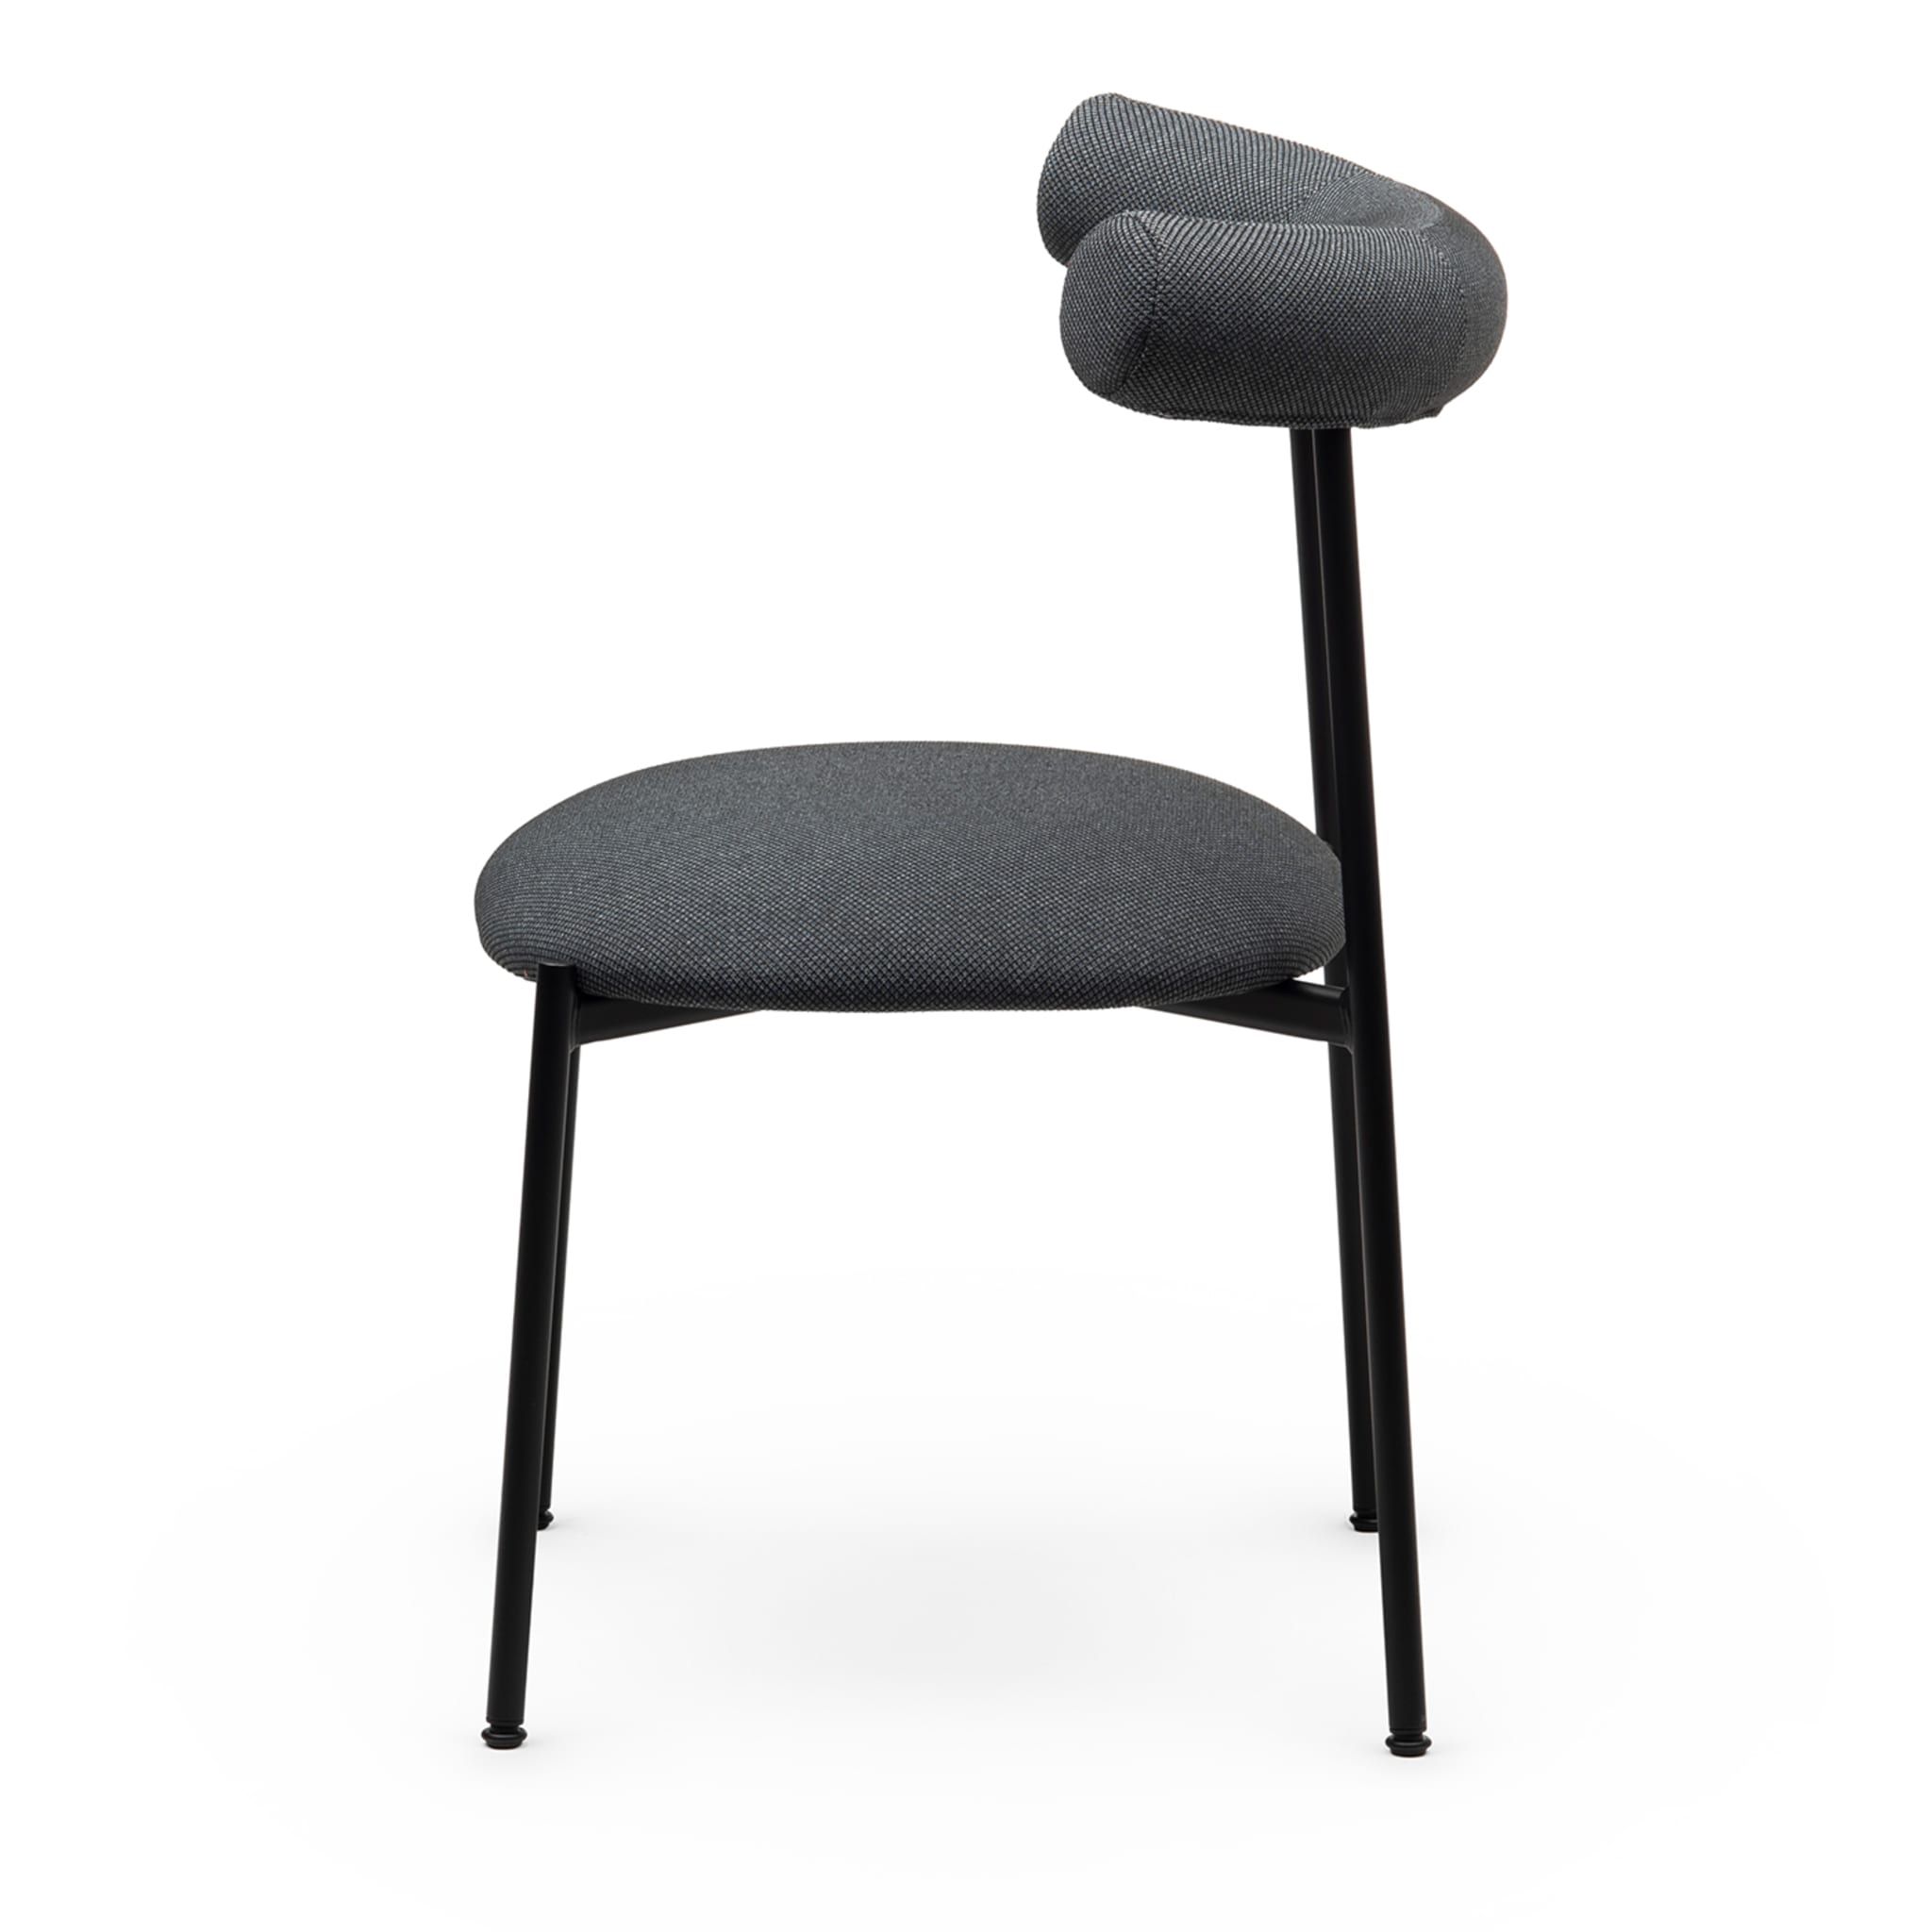 Pampa S Gray Chair by Studio Pastina - Alternative view 1